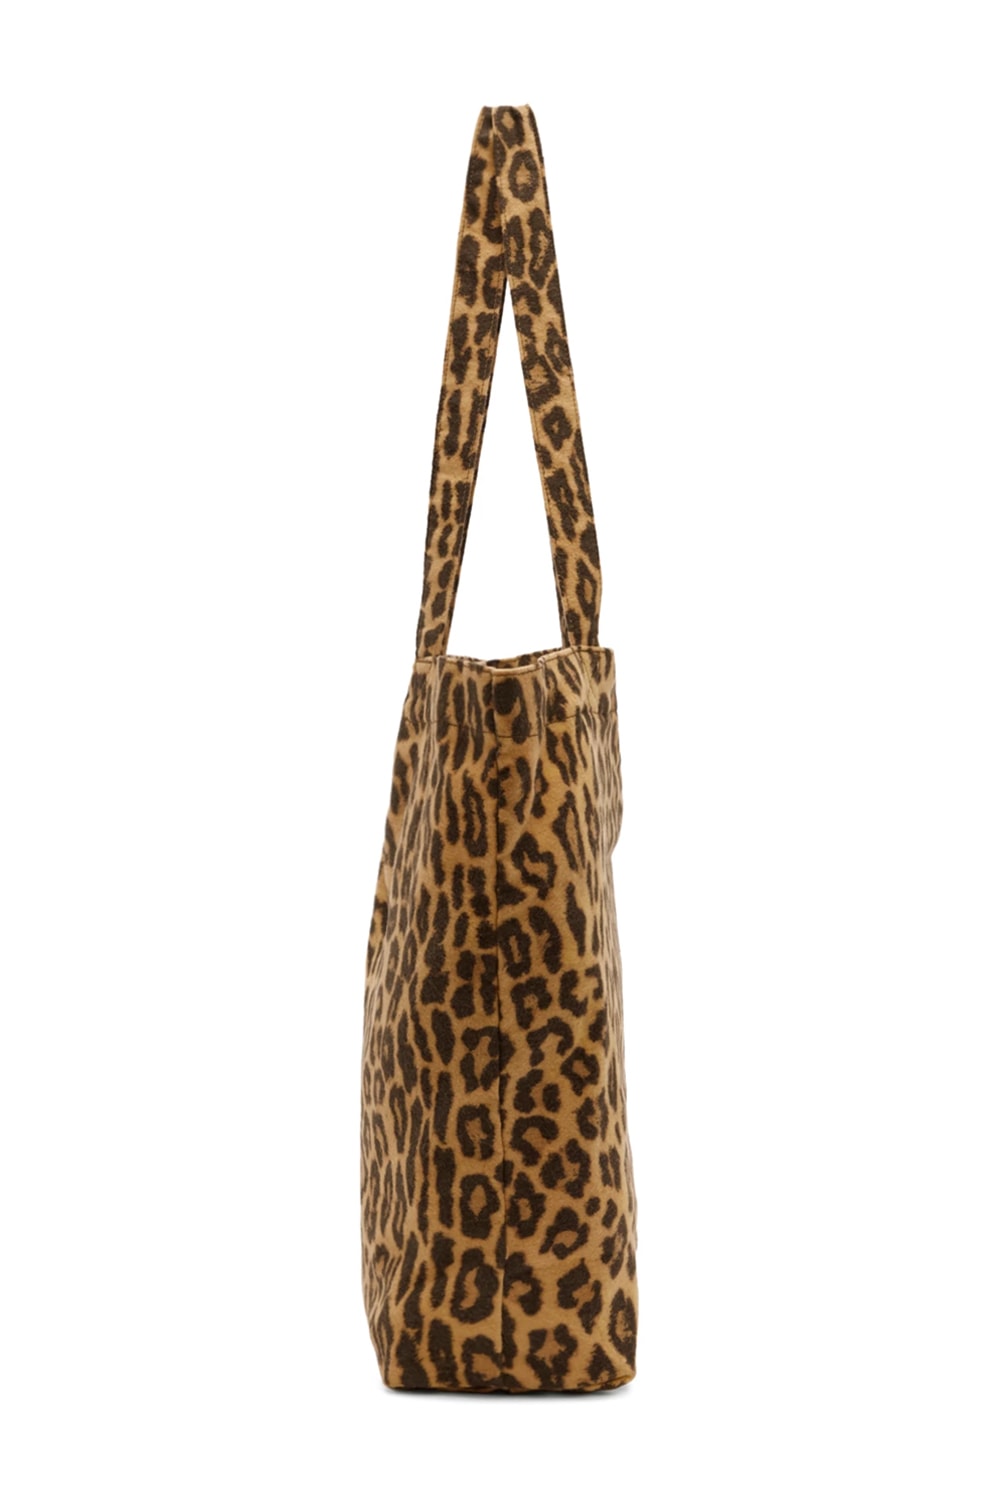 WACKO MARIA Leopard Print Tote Bag accessories release info SSENSE exclusive